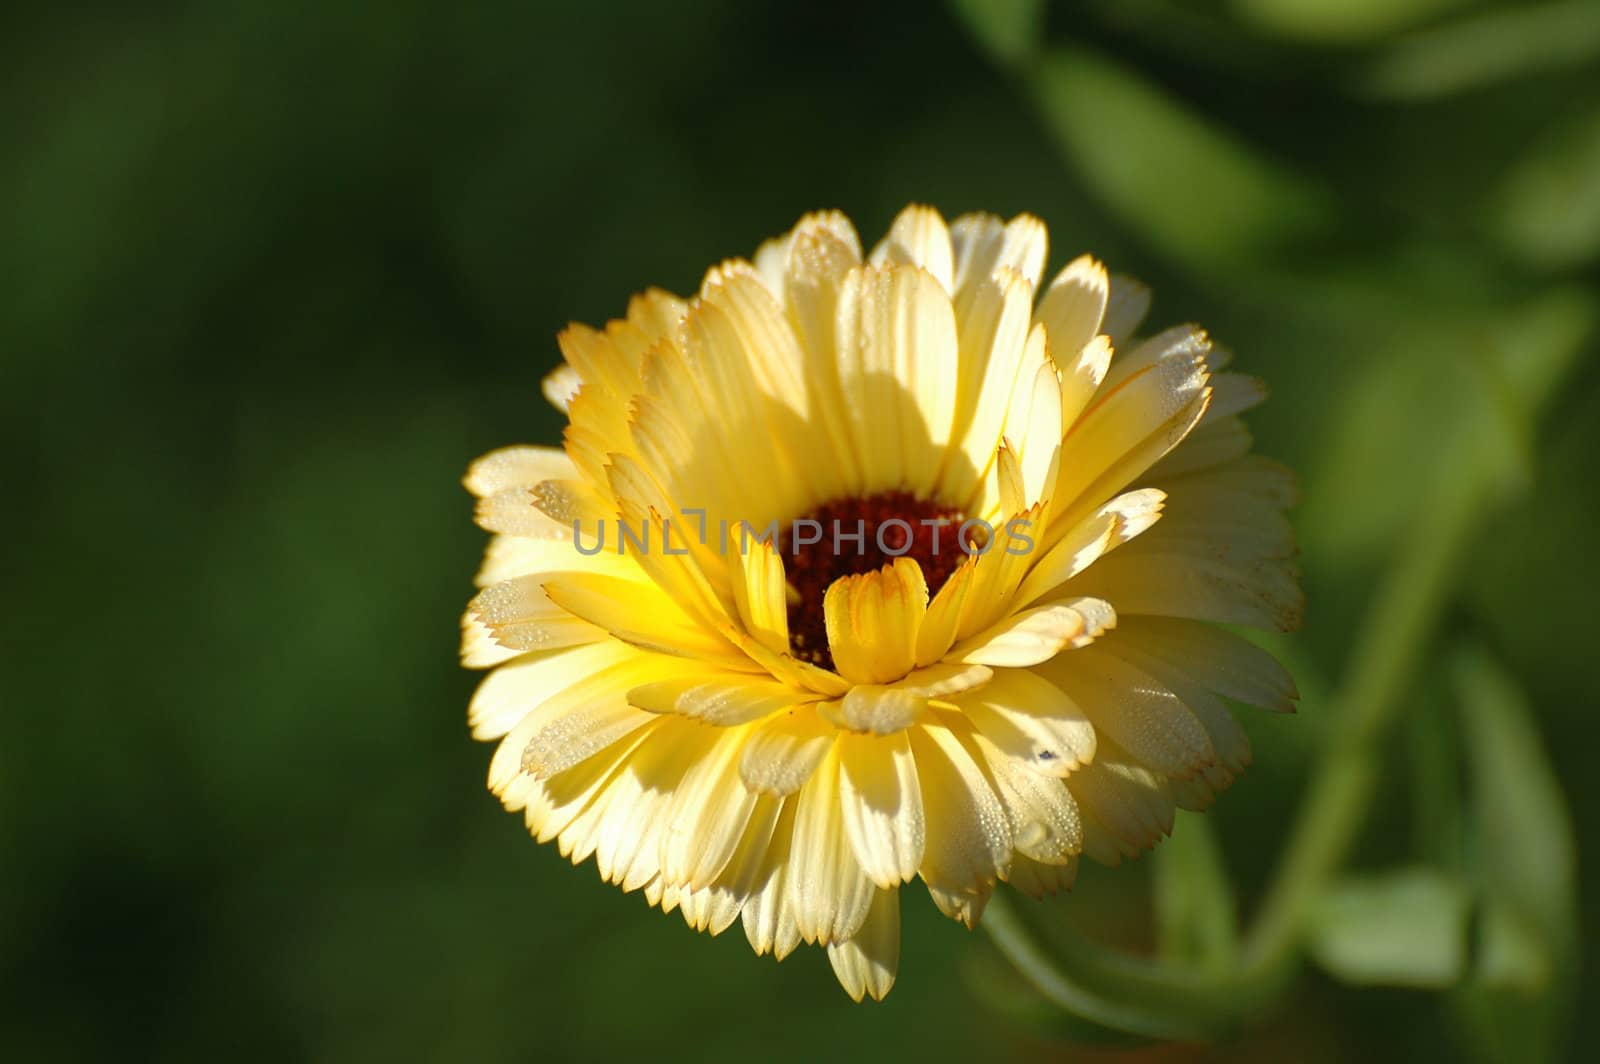 A flower called Marigold